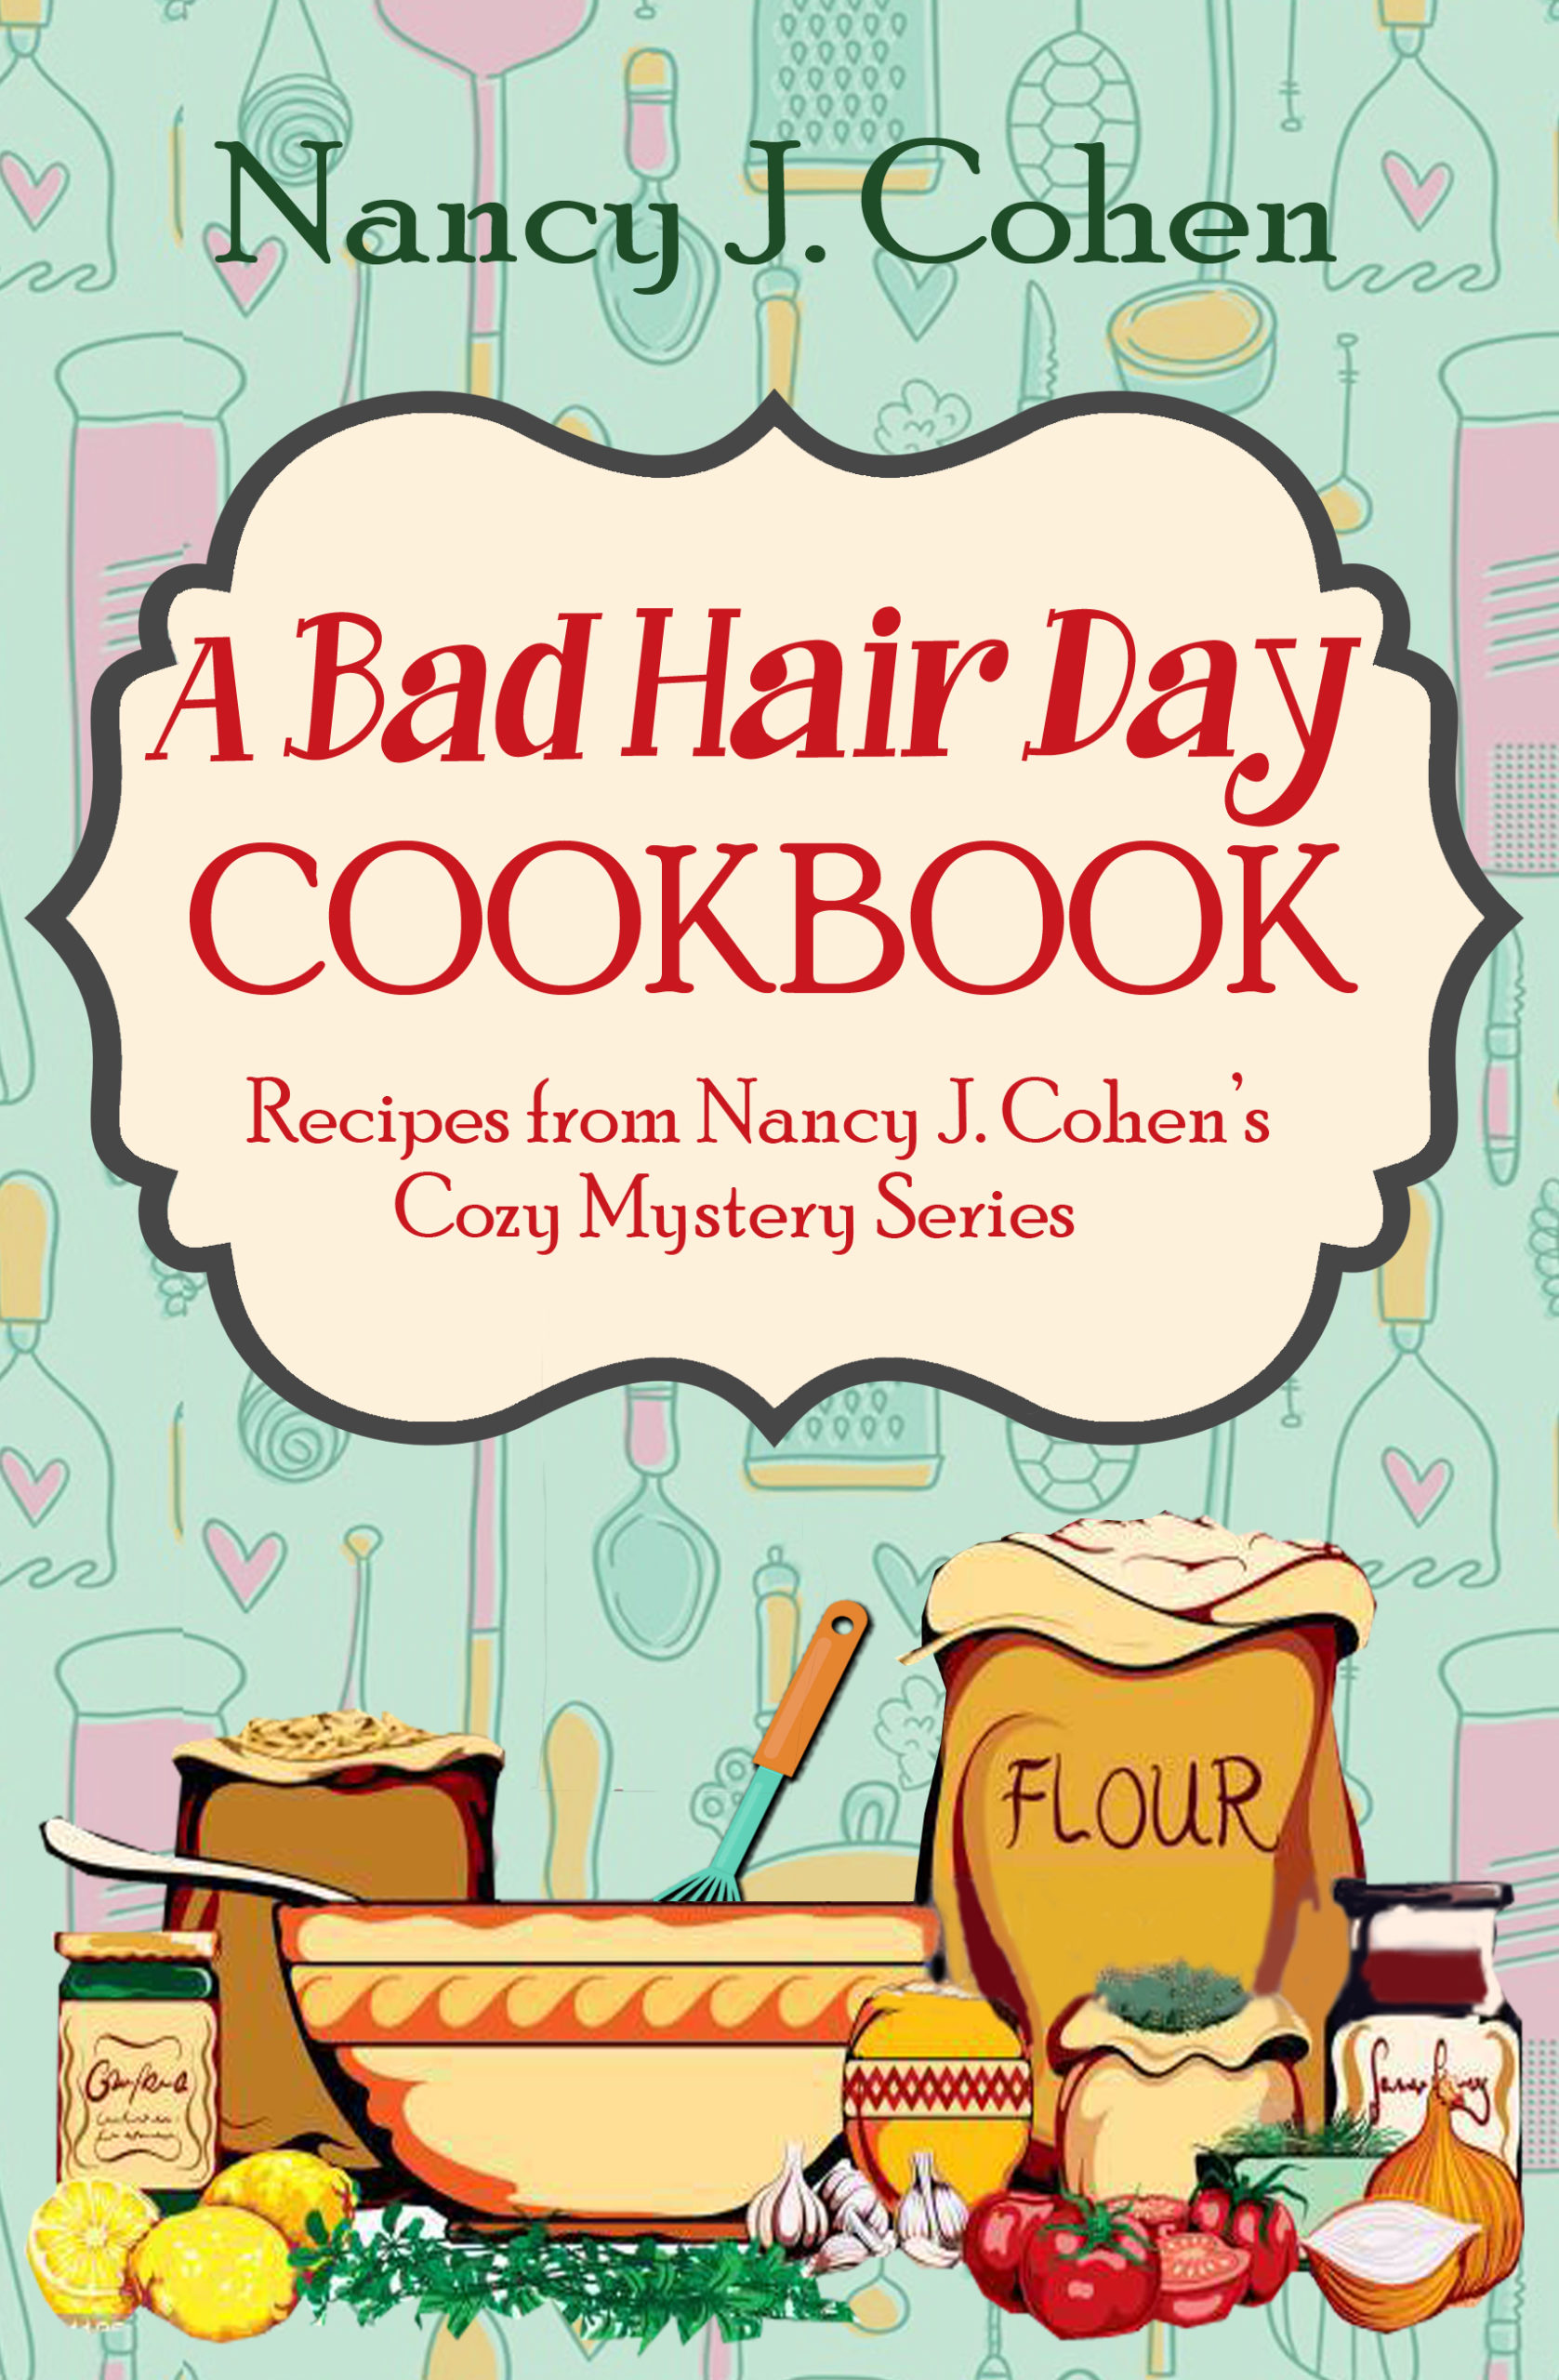 A Bad Hair Cookbook by Nancy J. Cohen